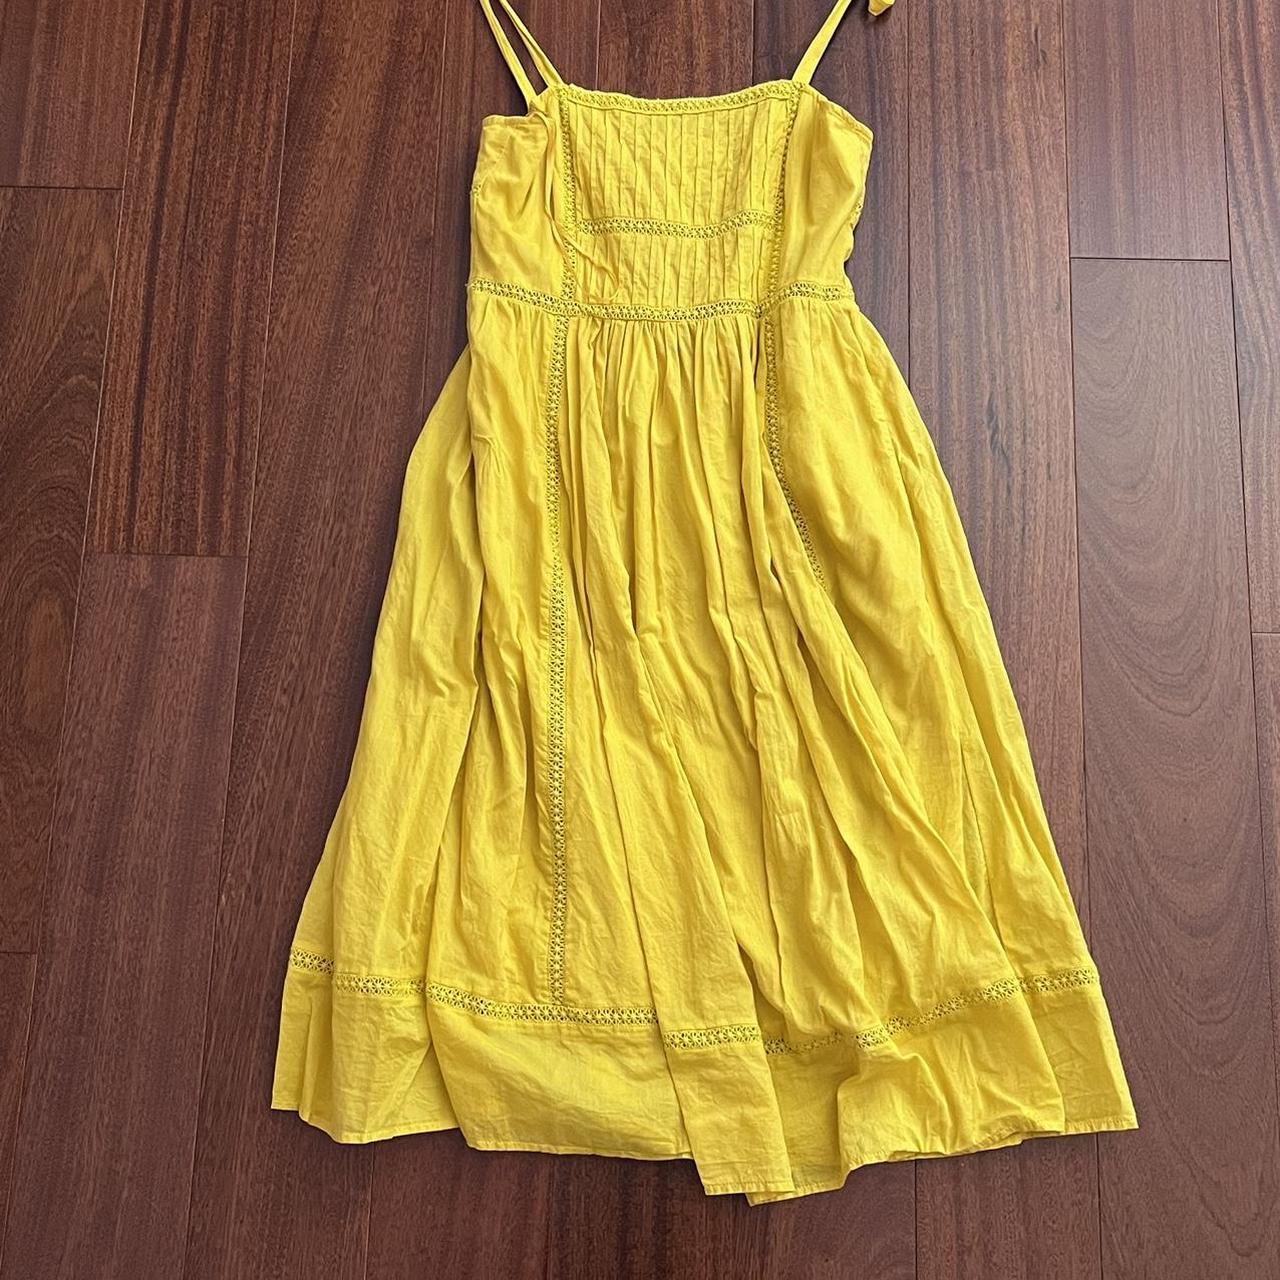 J.Crew Women's Yellow Dress | Depop